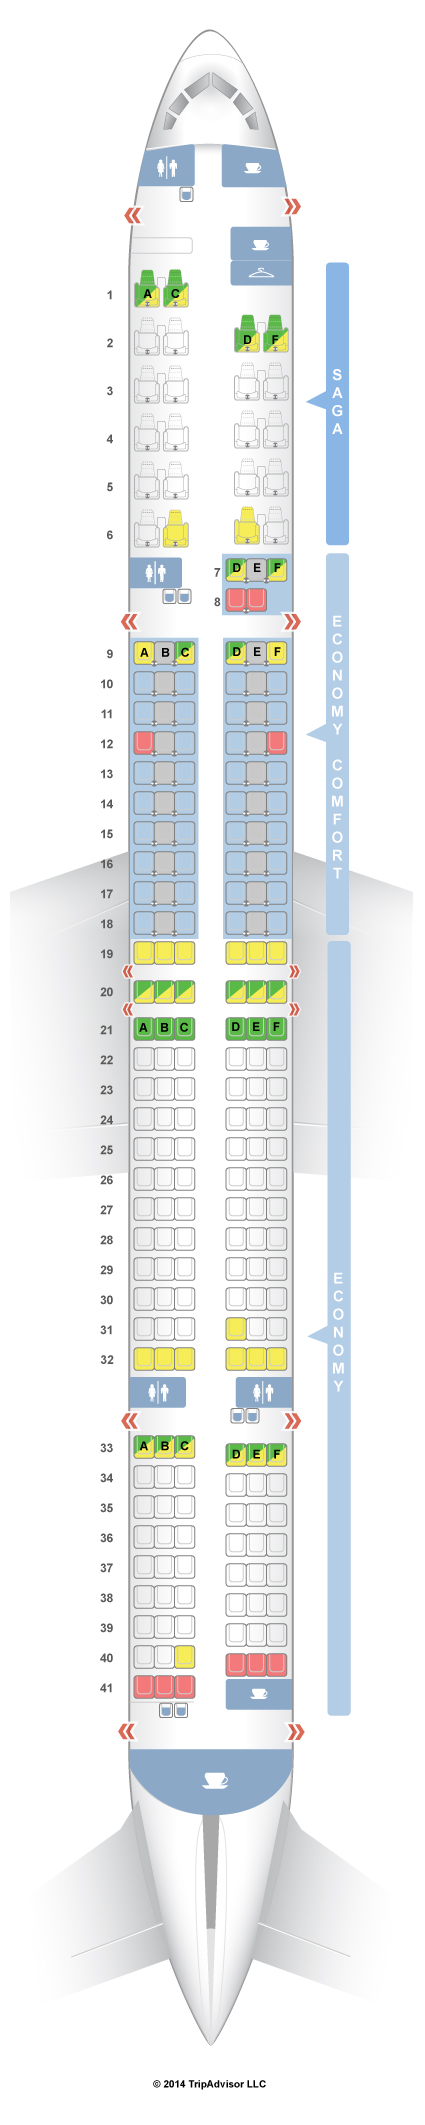 Icelandair Flight 680 Seating Chart